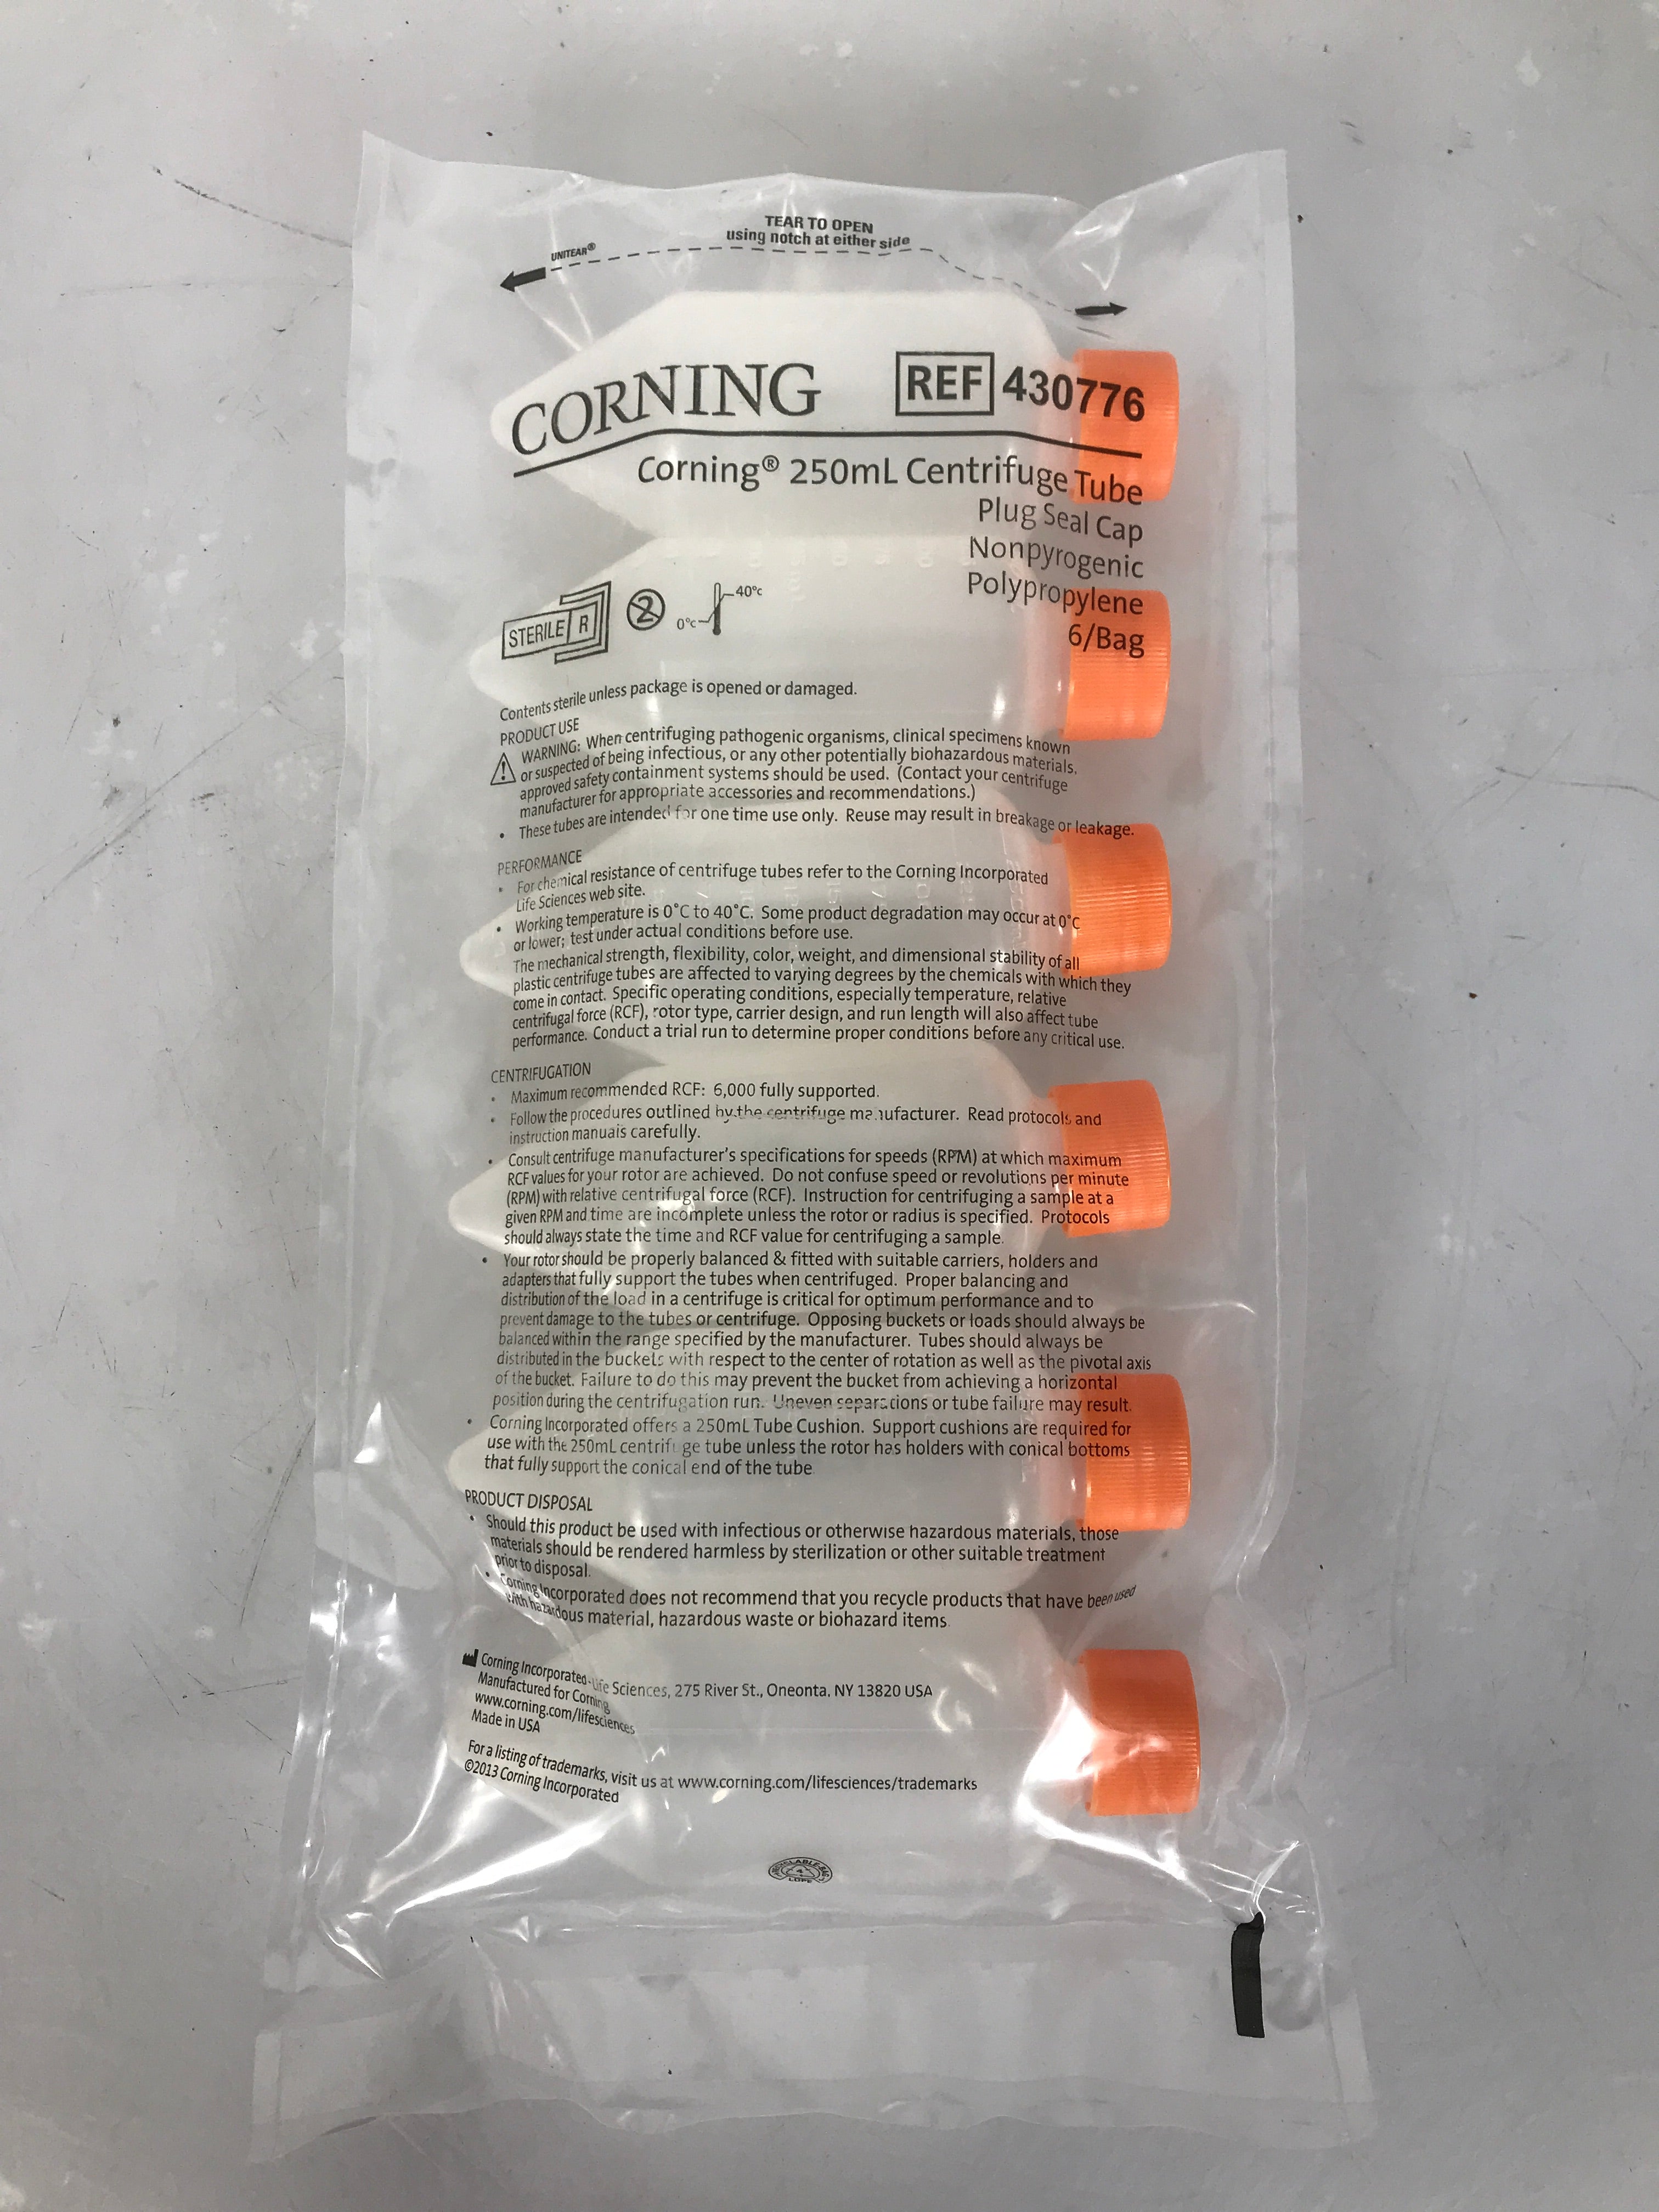 6 pack New Sealed Corning 250ml Centrifuge Tubes REF 430776